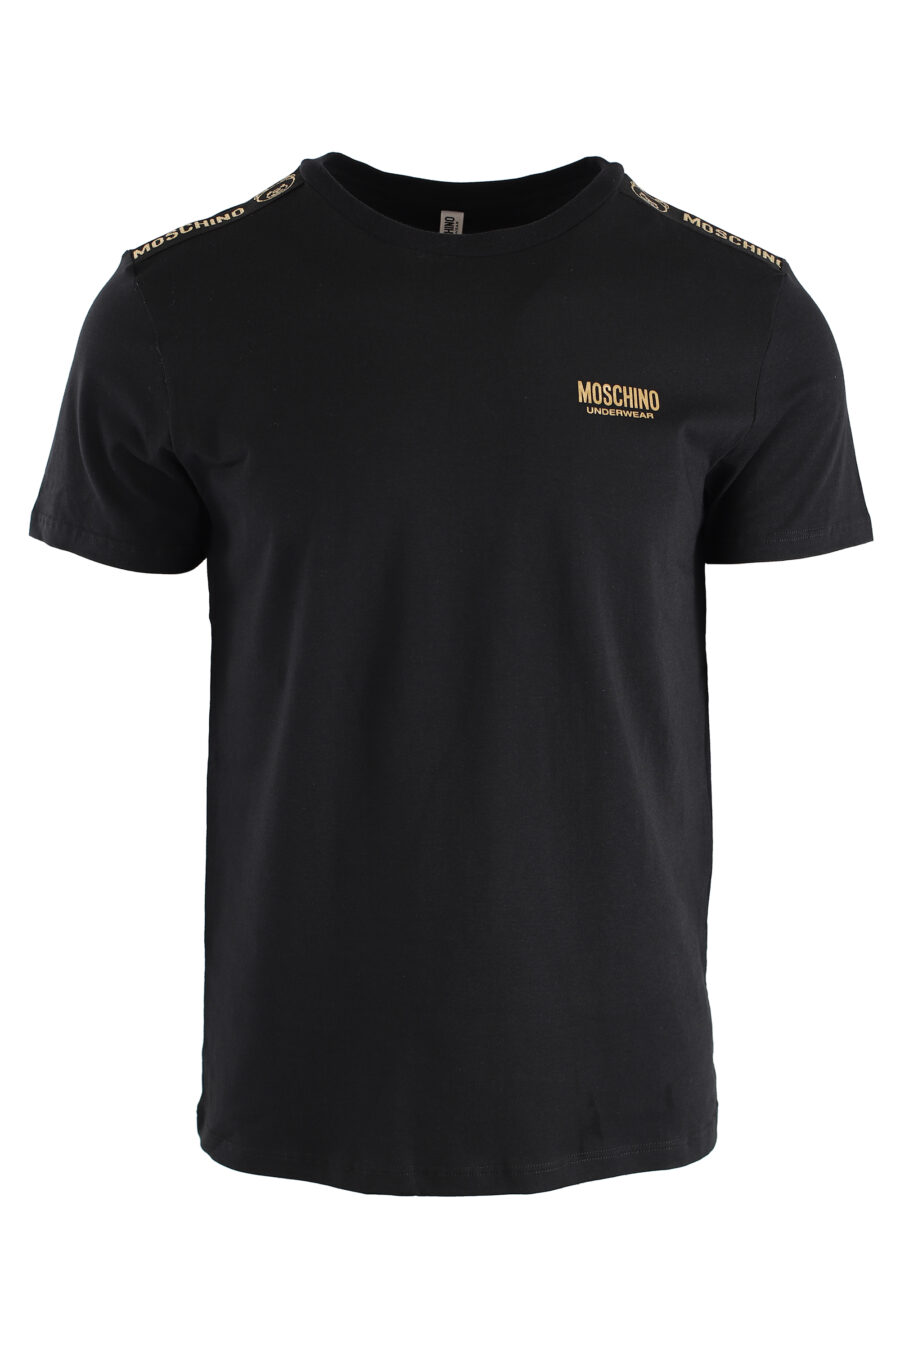 Set de camiseta y boxer negro con minilogo dorado - IMG 7604